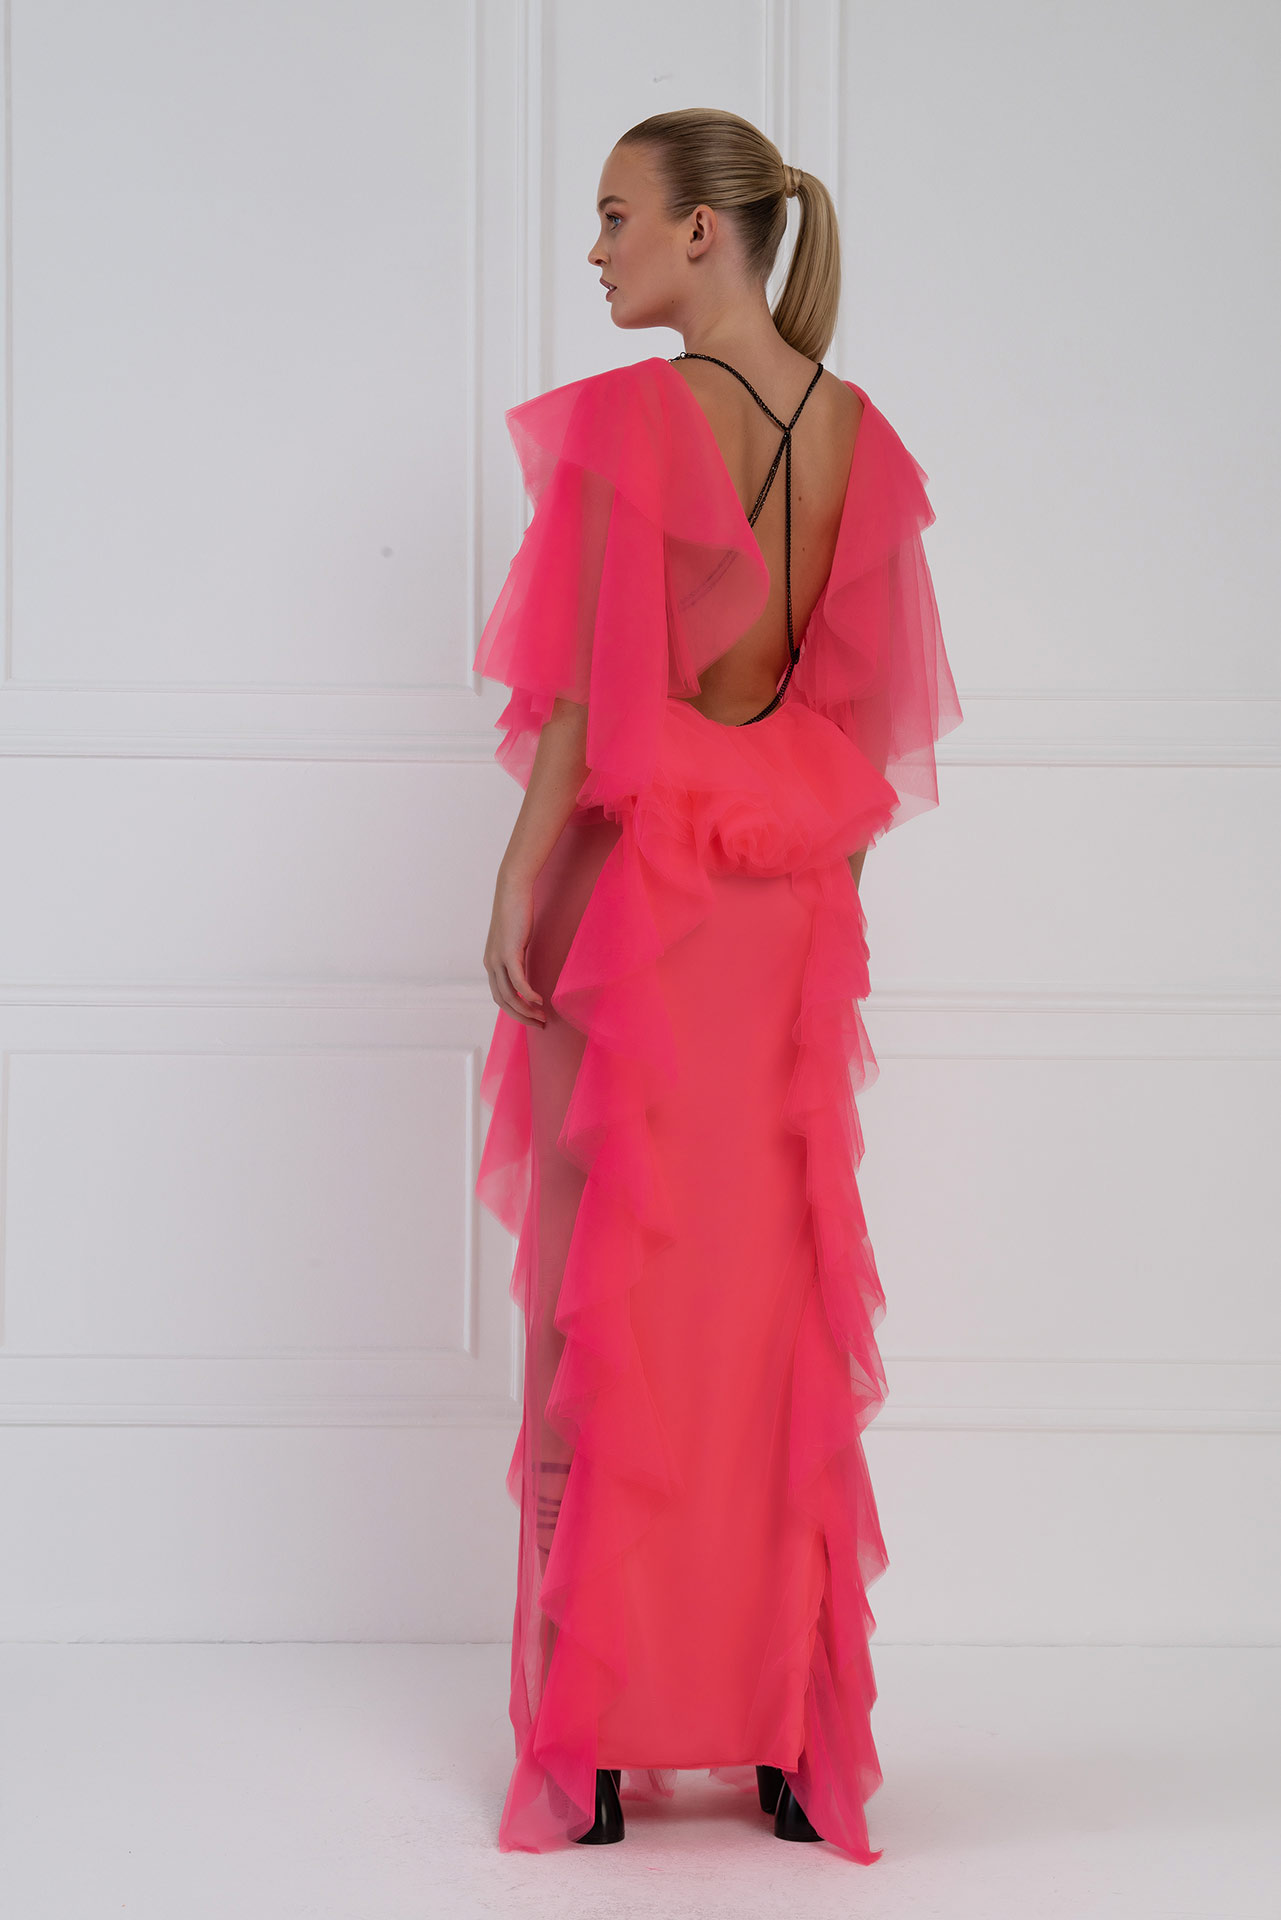 Tulle Detail Sheer Neon Pink Maxi Dress ...